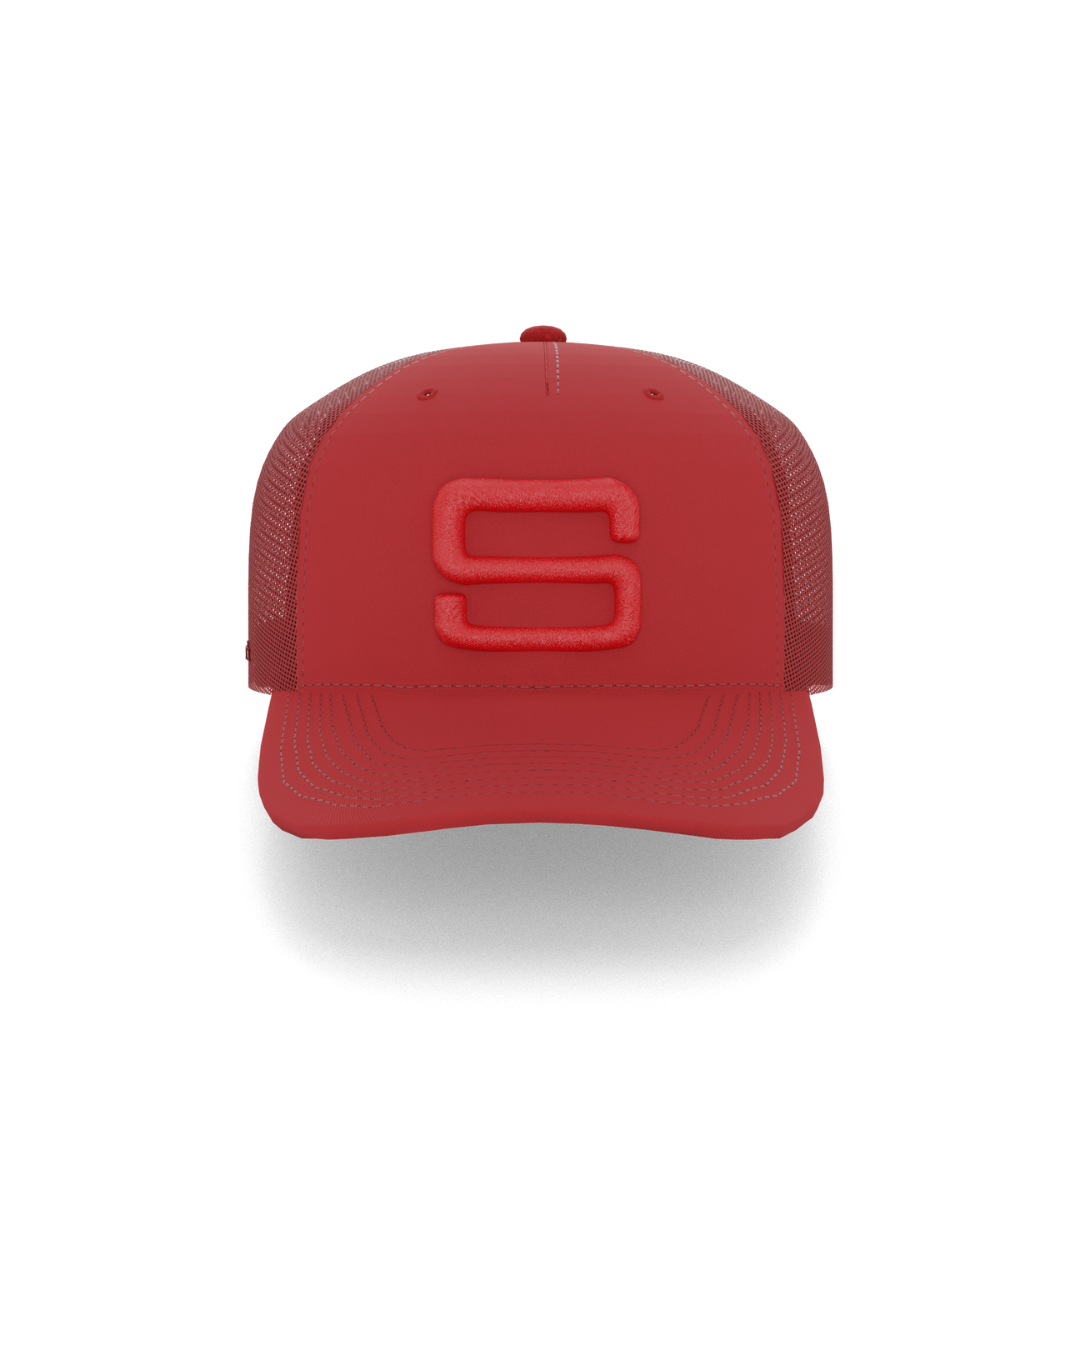 The Steadyrack Cap - Red